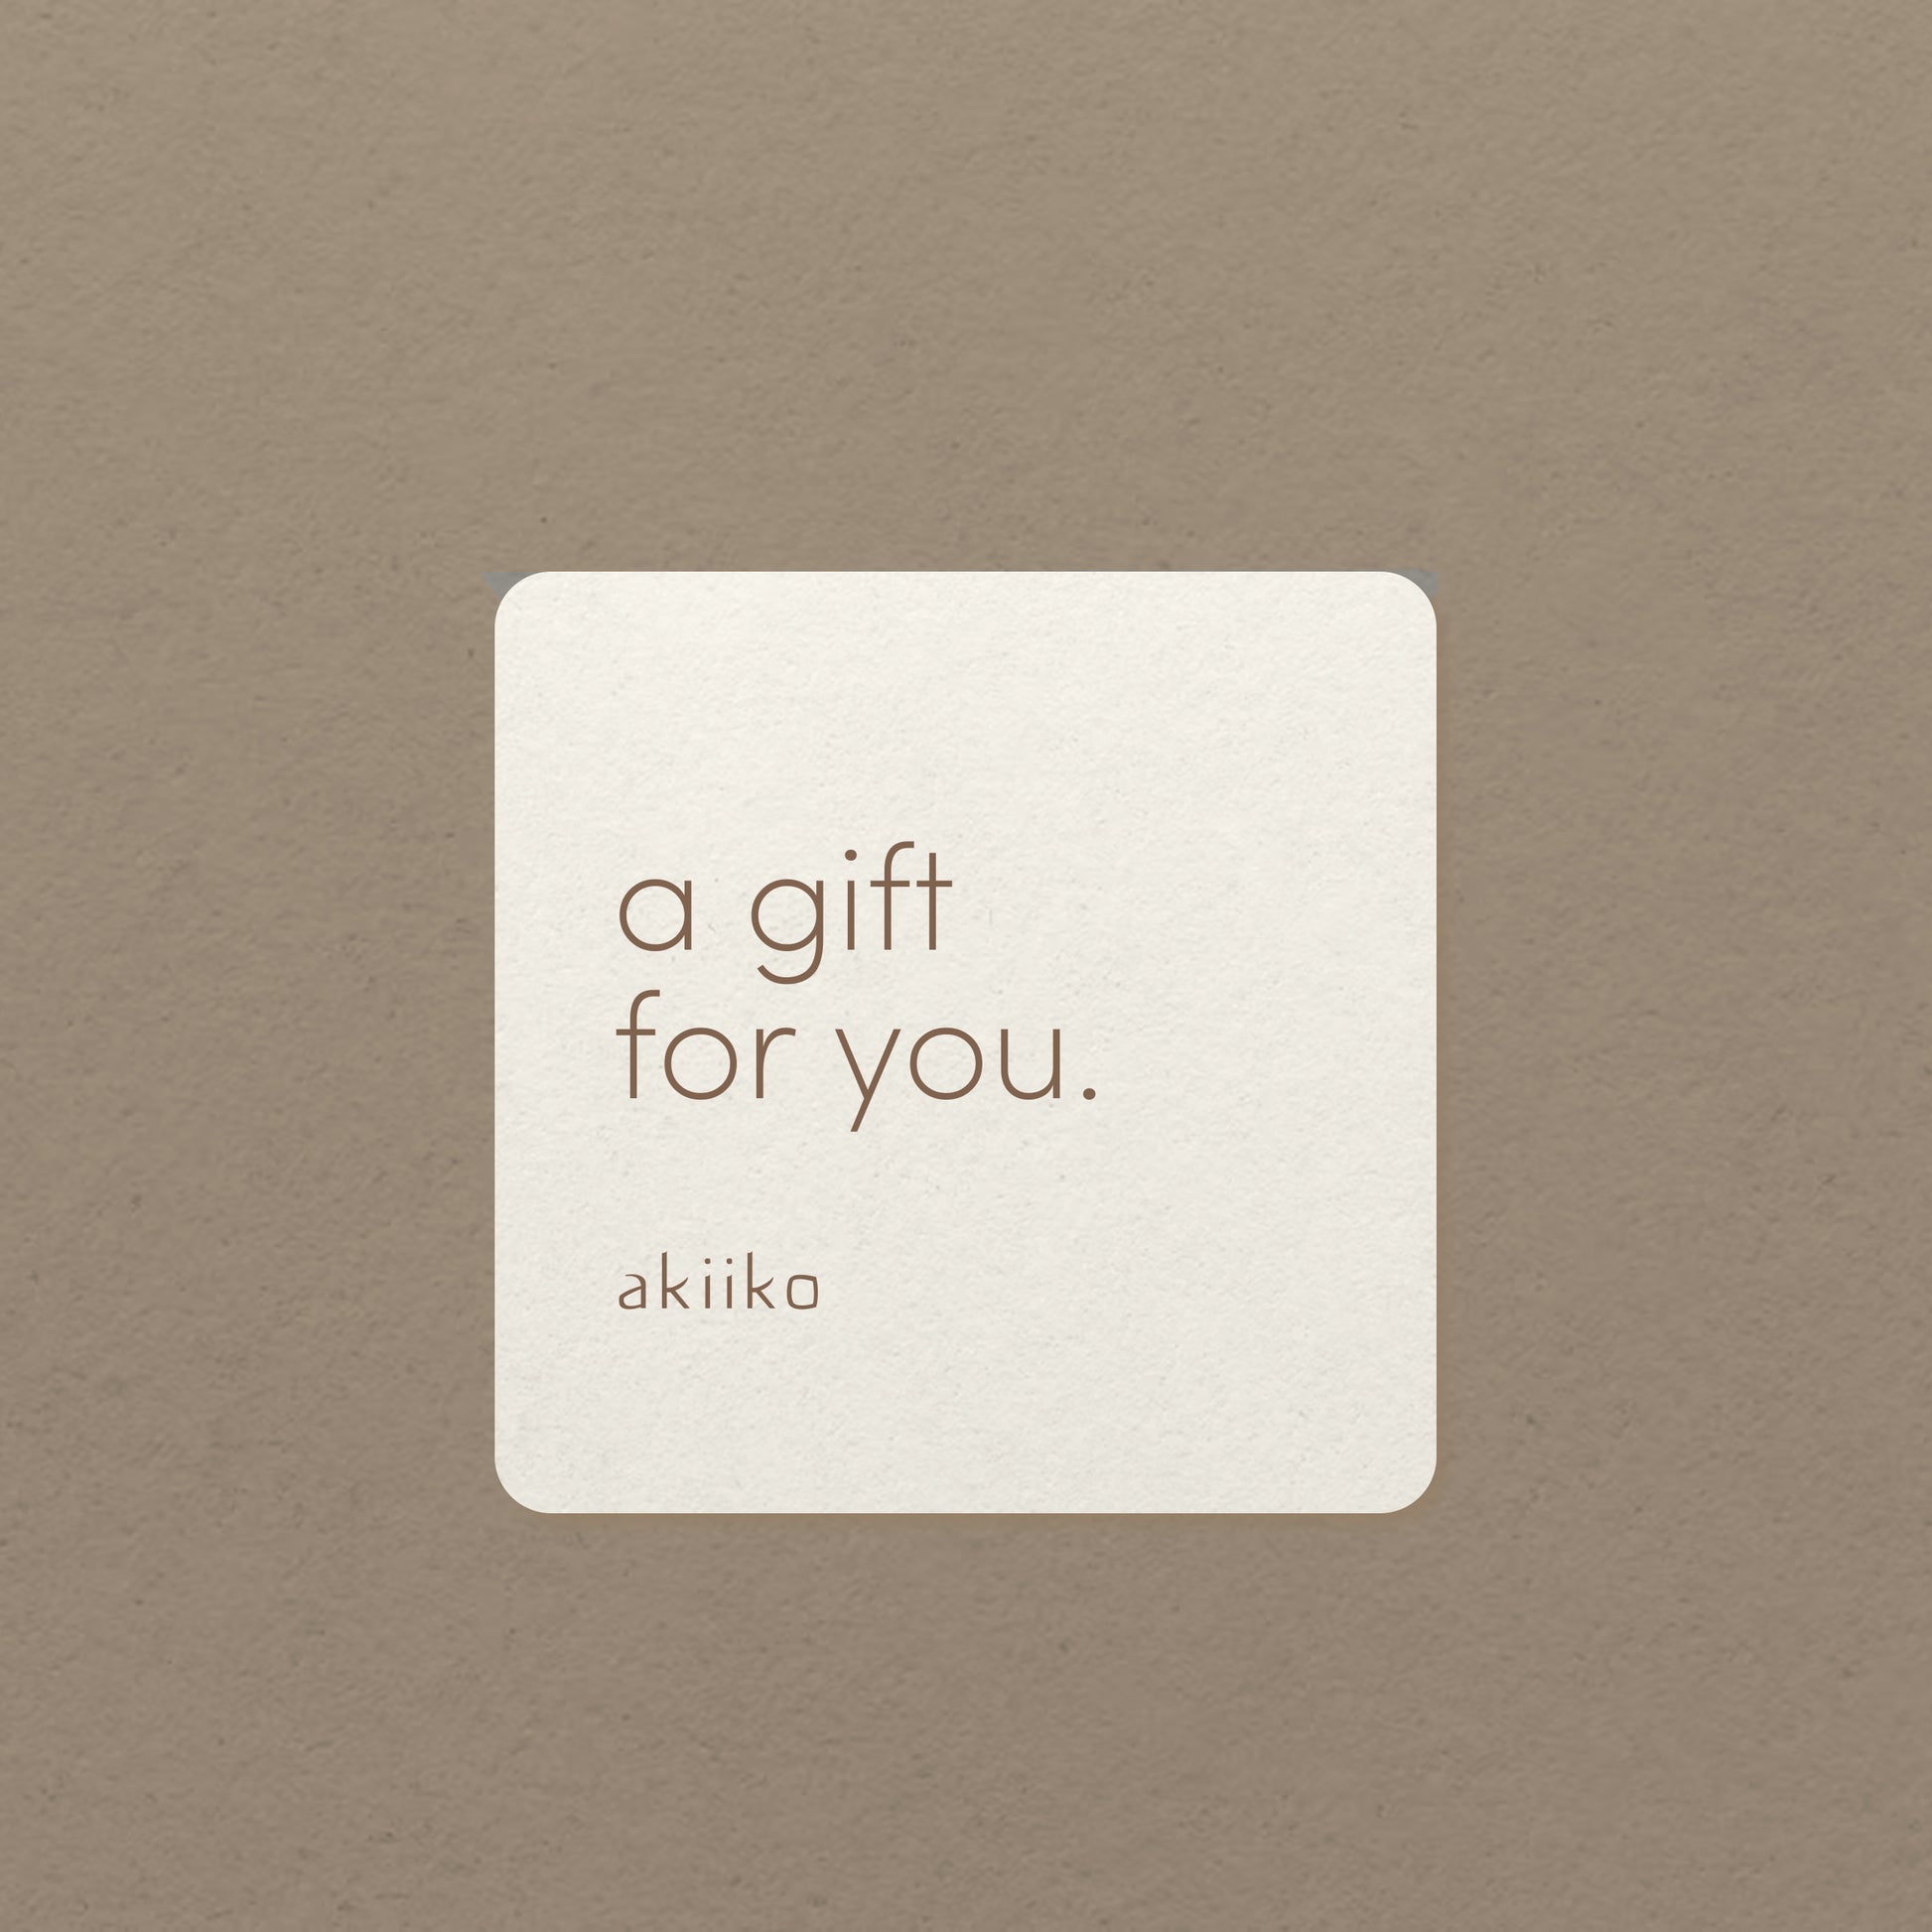 akiiko's Gift card